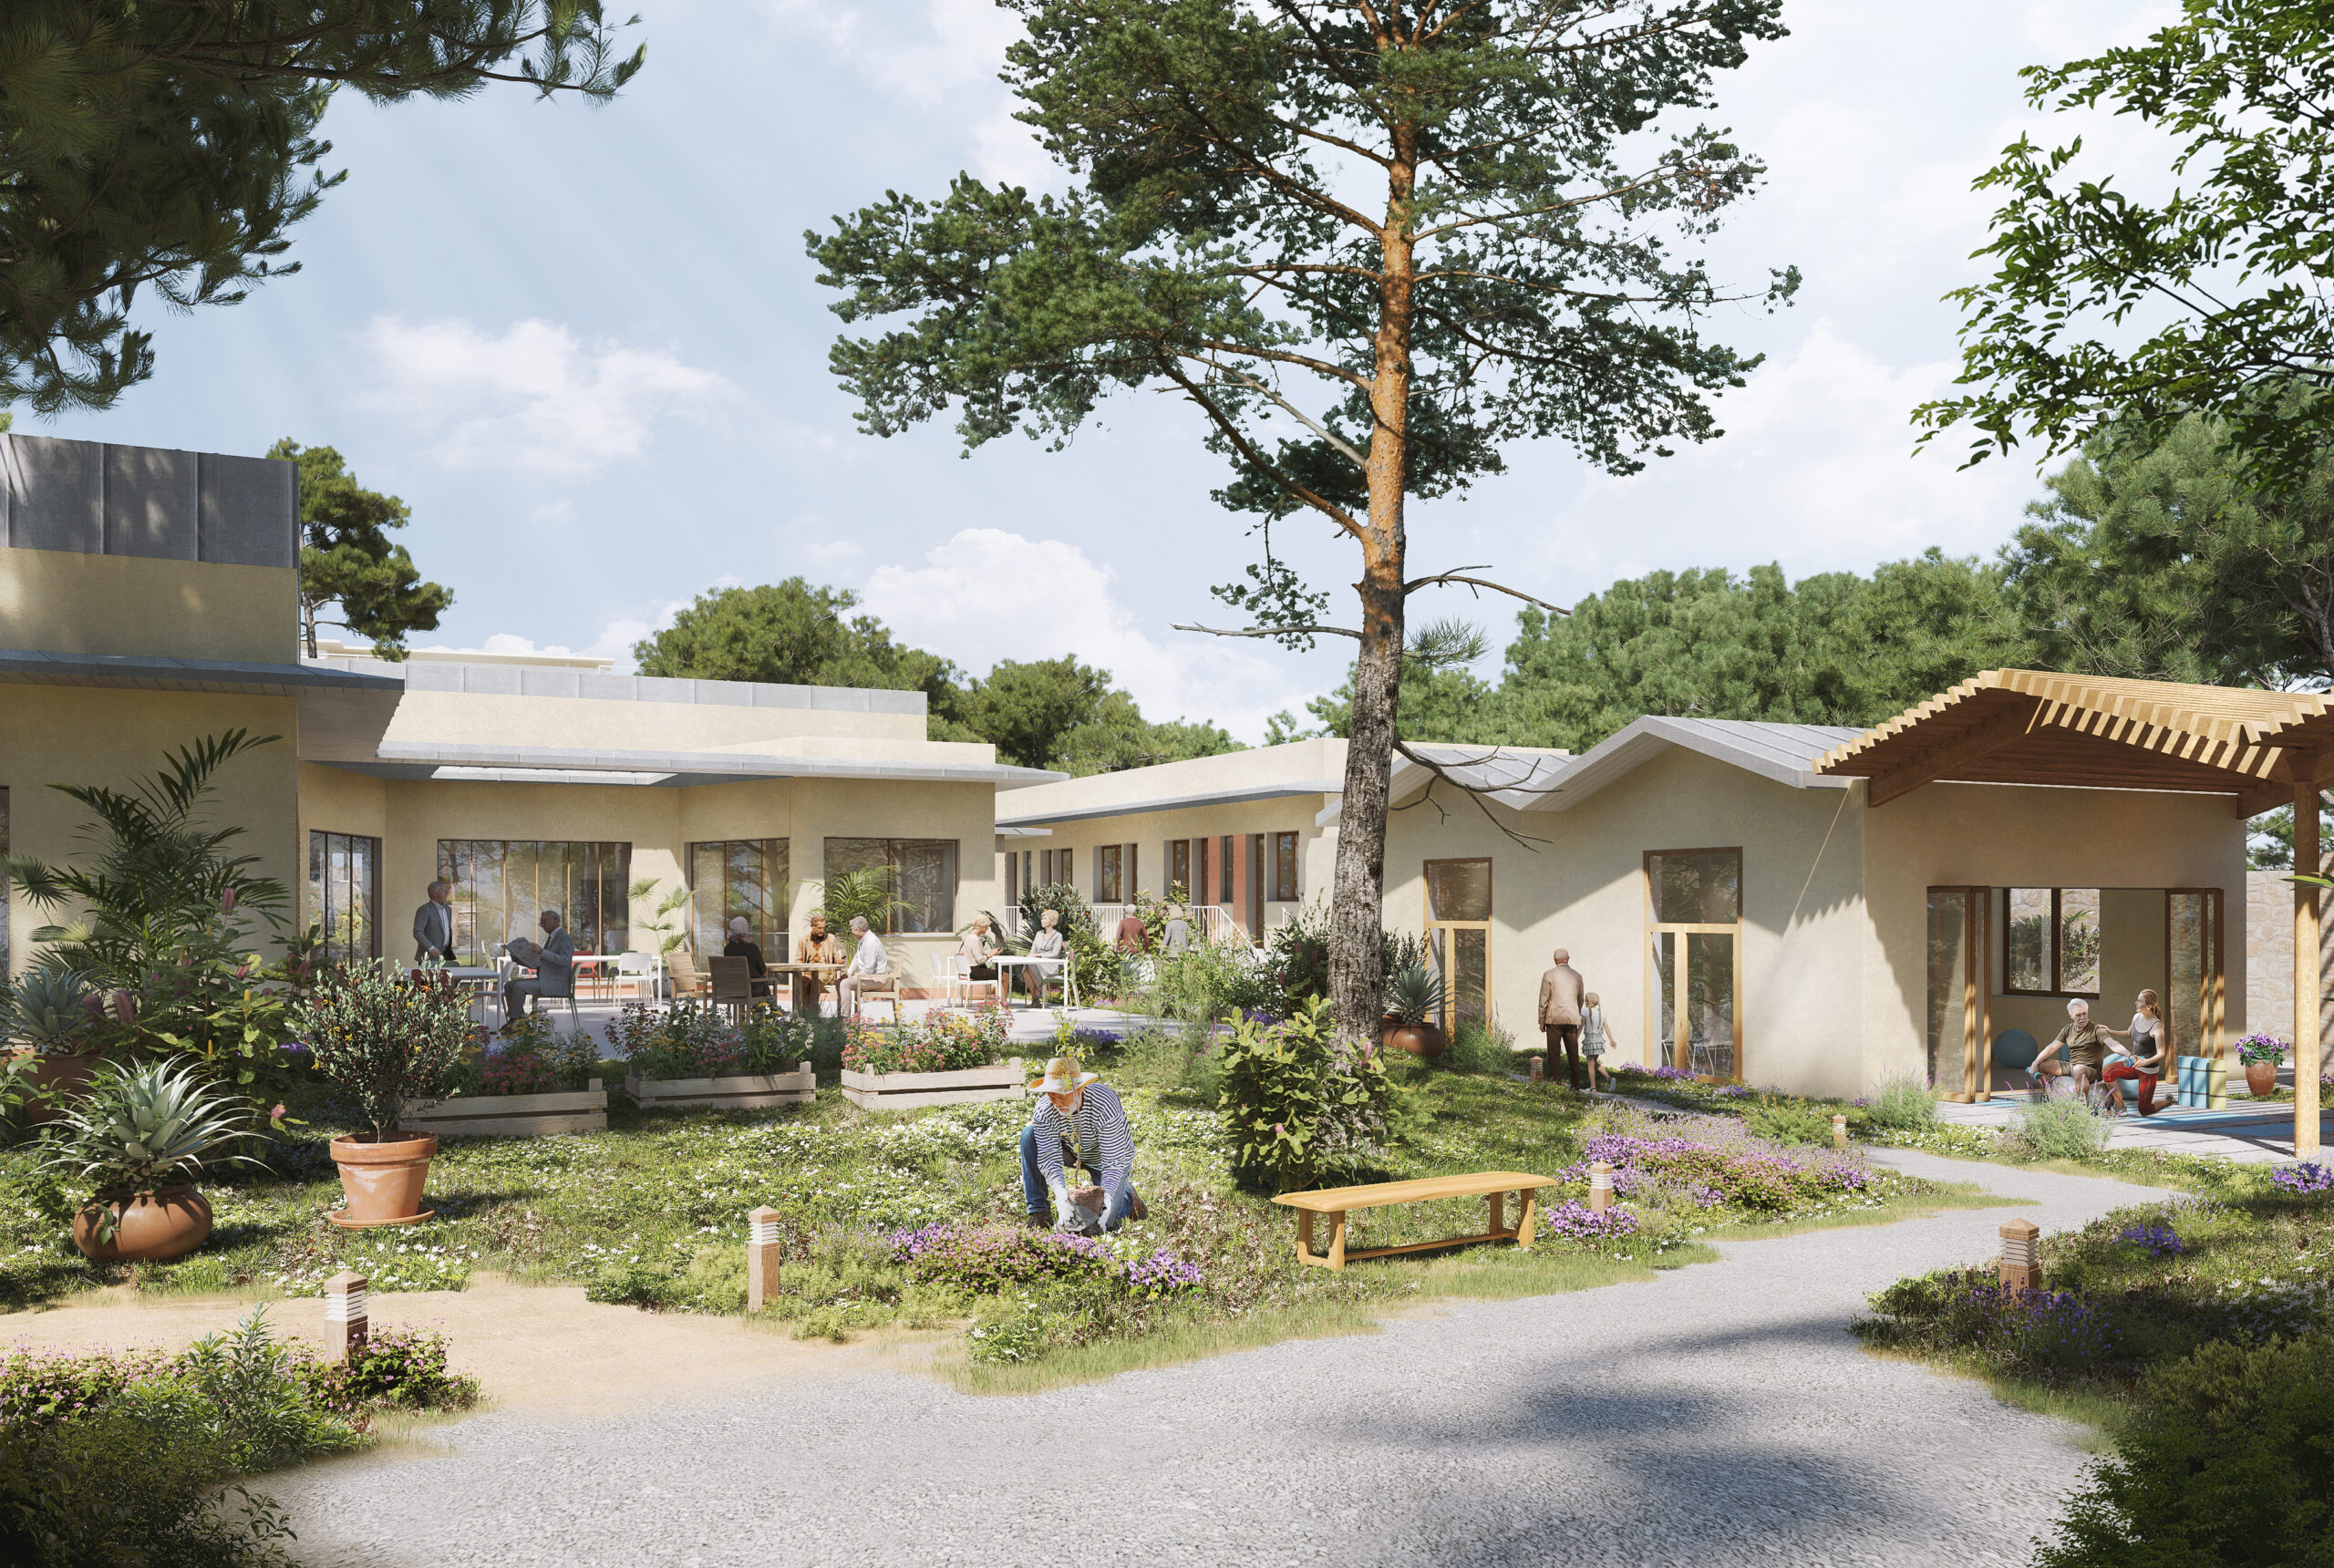 Cohousing Senior Jubilar Villa Rosita </br>Torrelodones Madrid</br>En proyecto